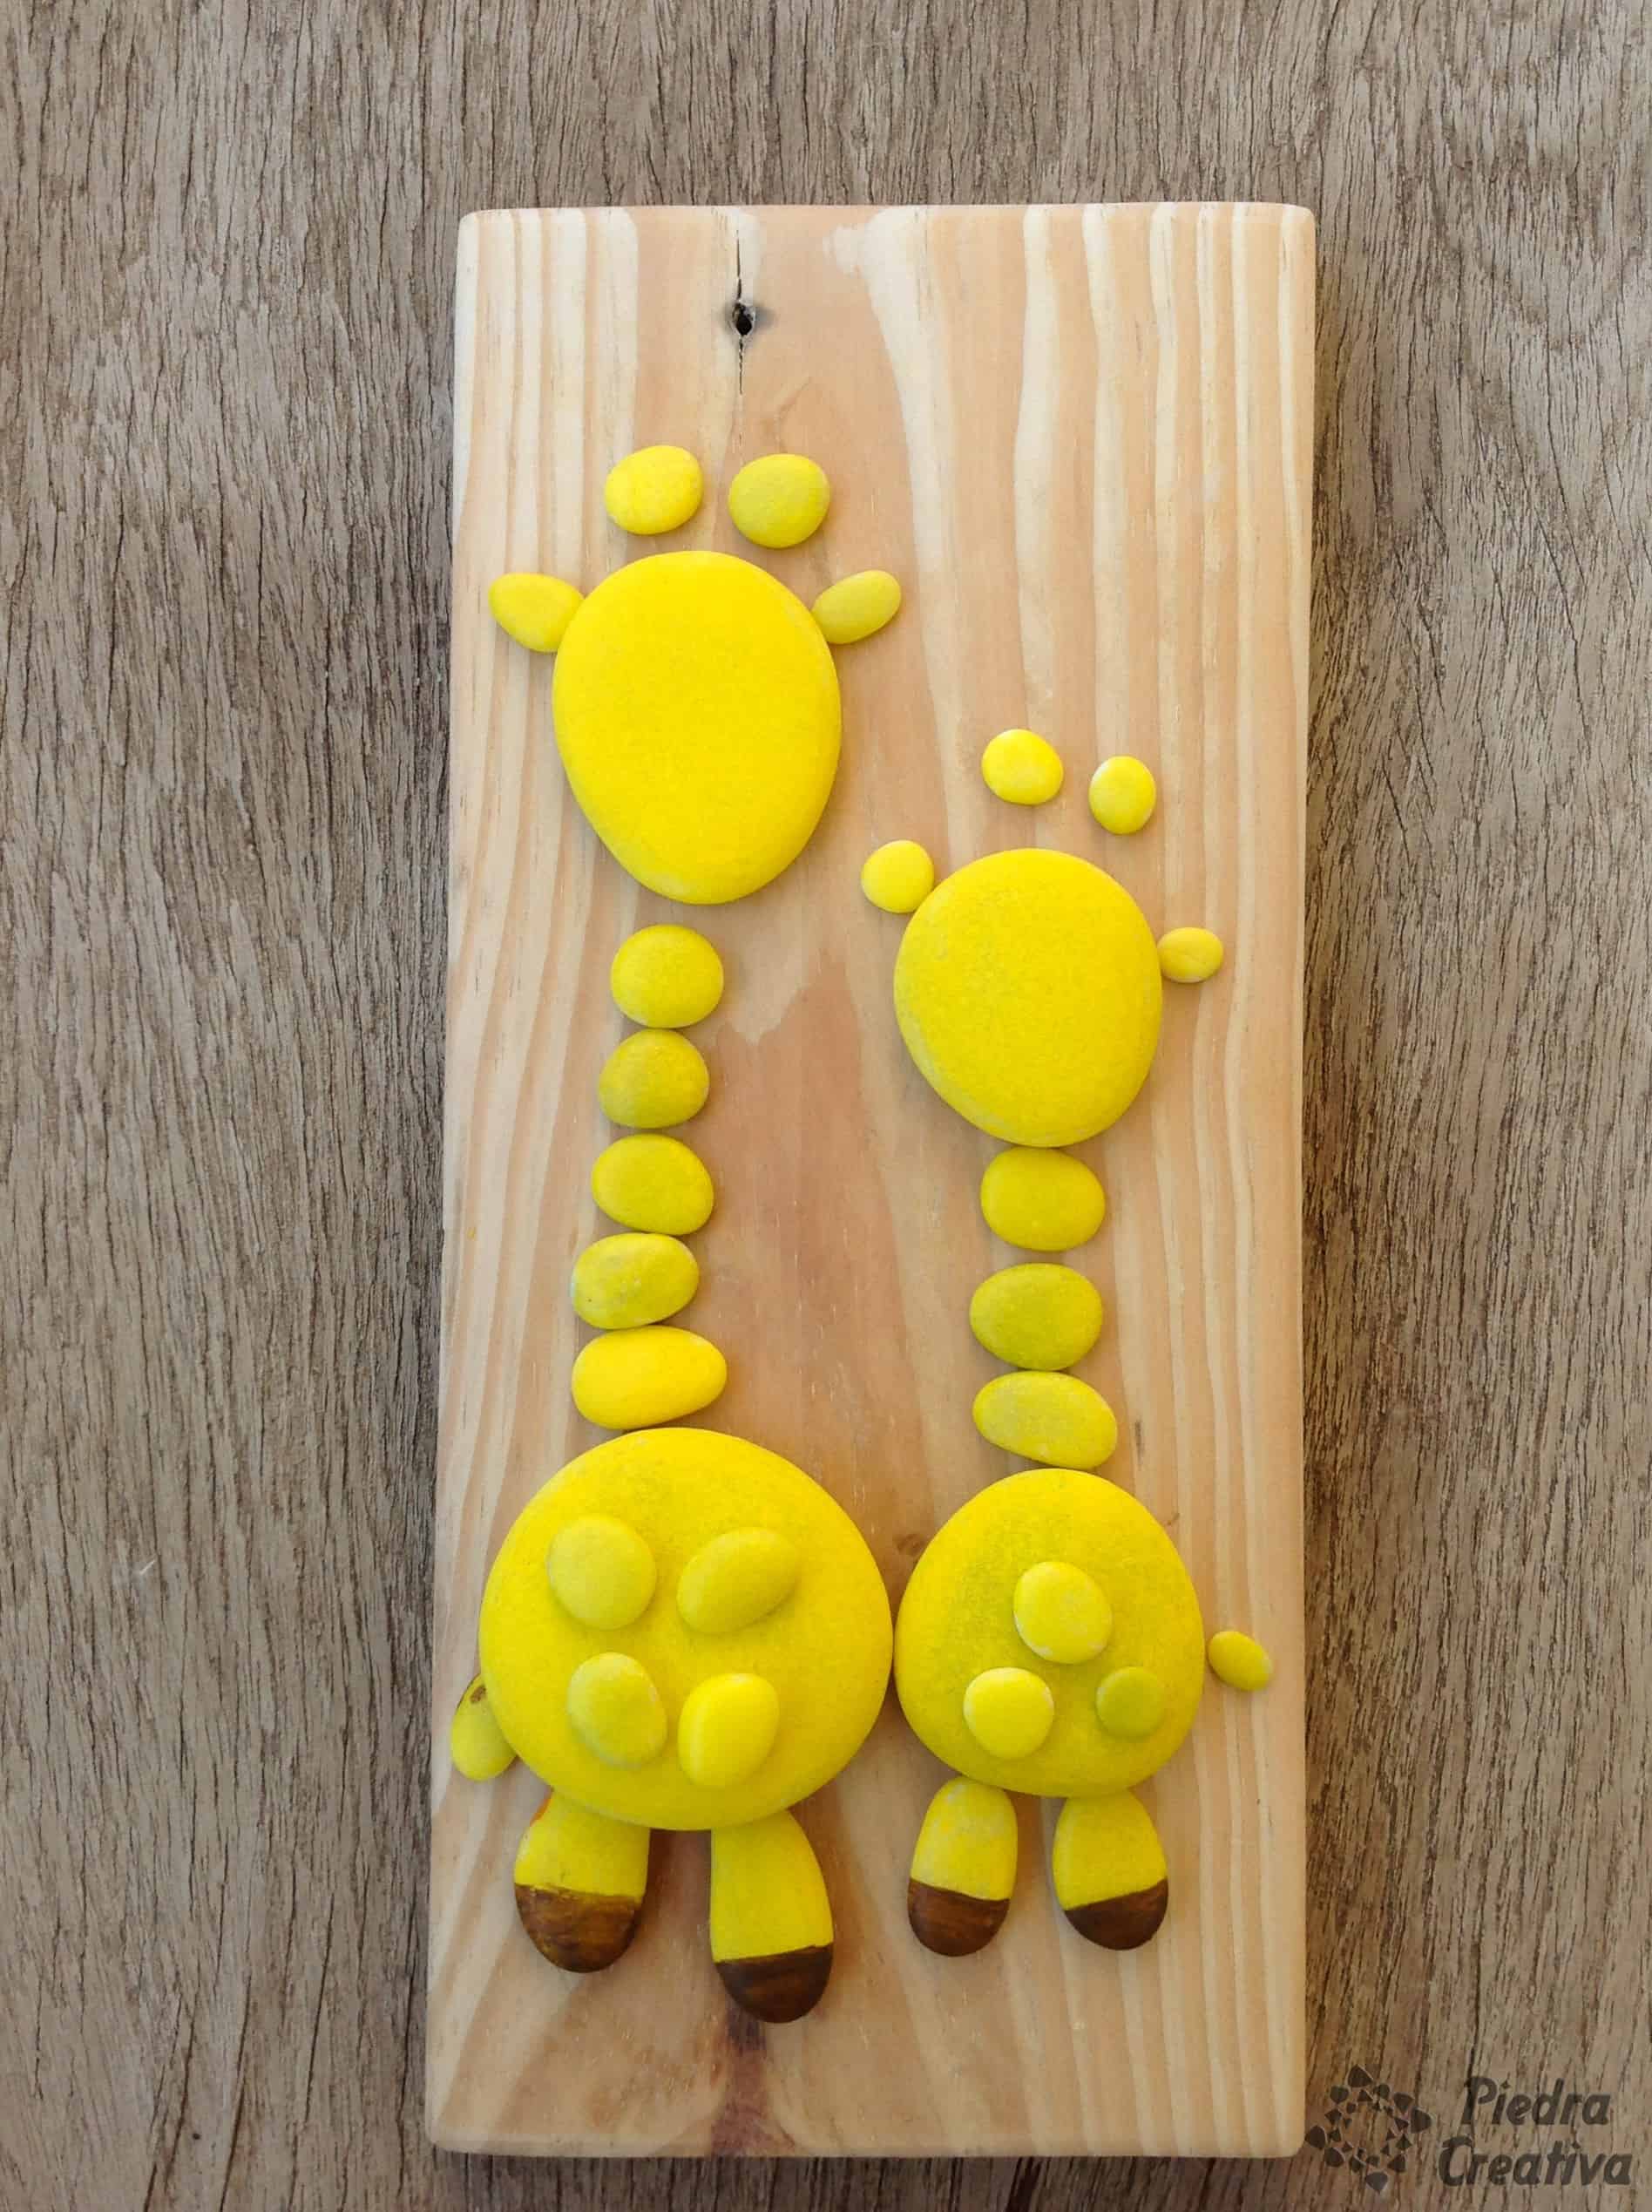 Wooden mounted giraffe rock painting